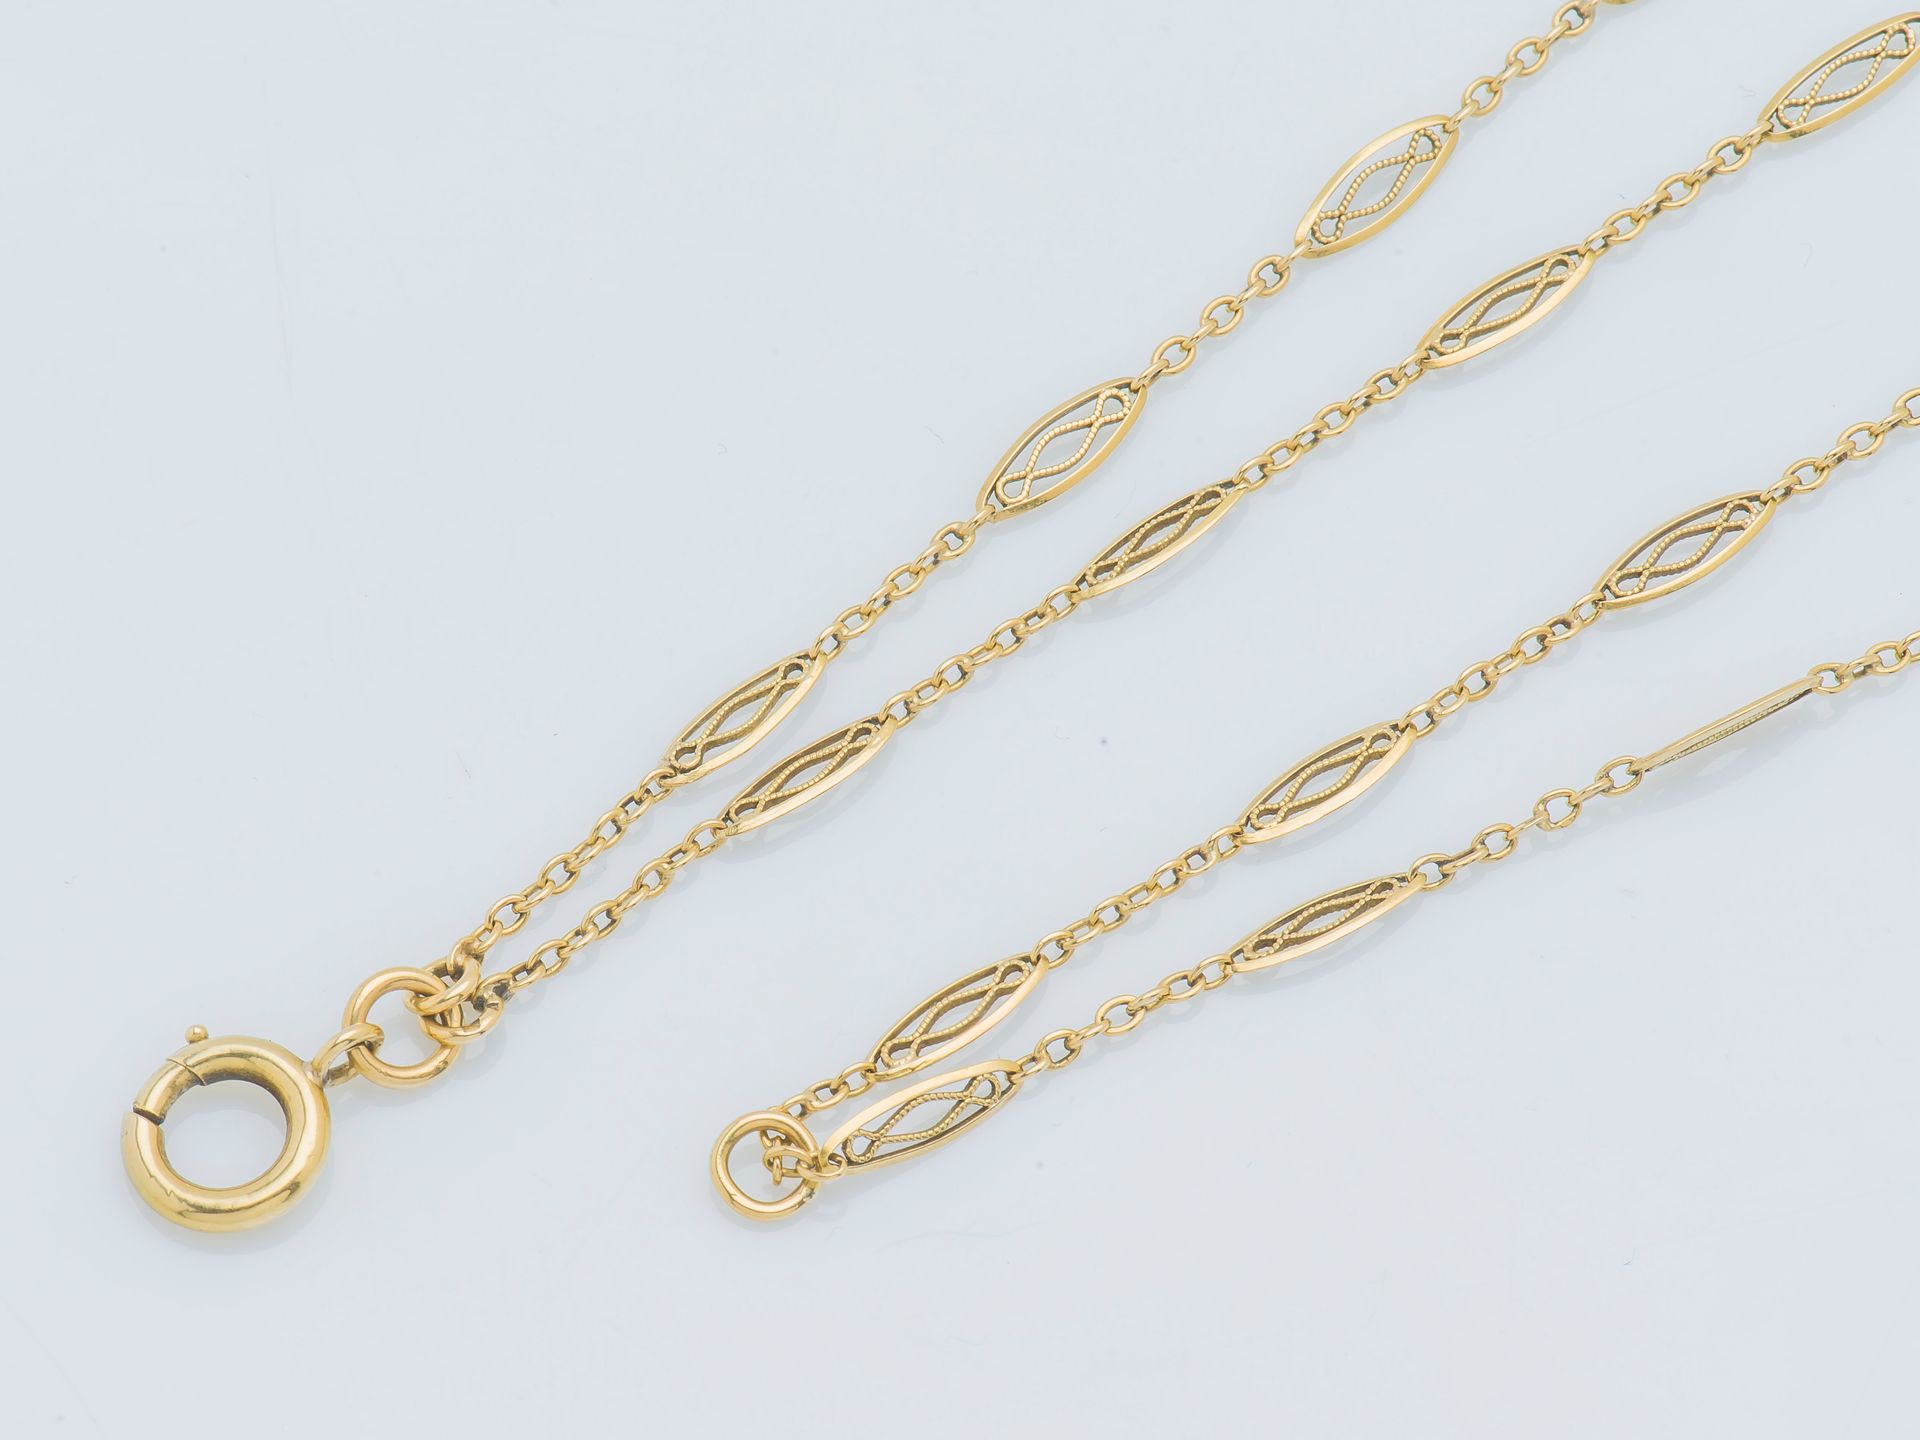 Null 18K（750‰）黄金表链，丝状的椭圆形链节穿插在一起。法国作品，金匠标记R.C.

长度 : 180 cm 毛重 : 21,8 g